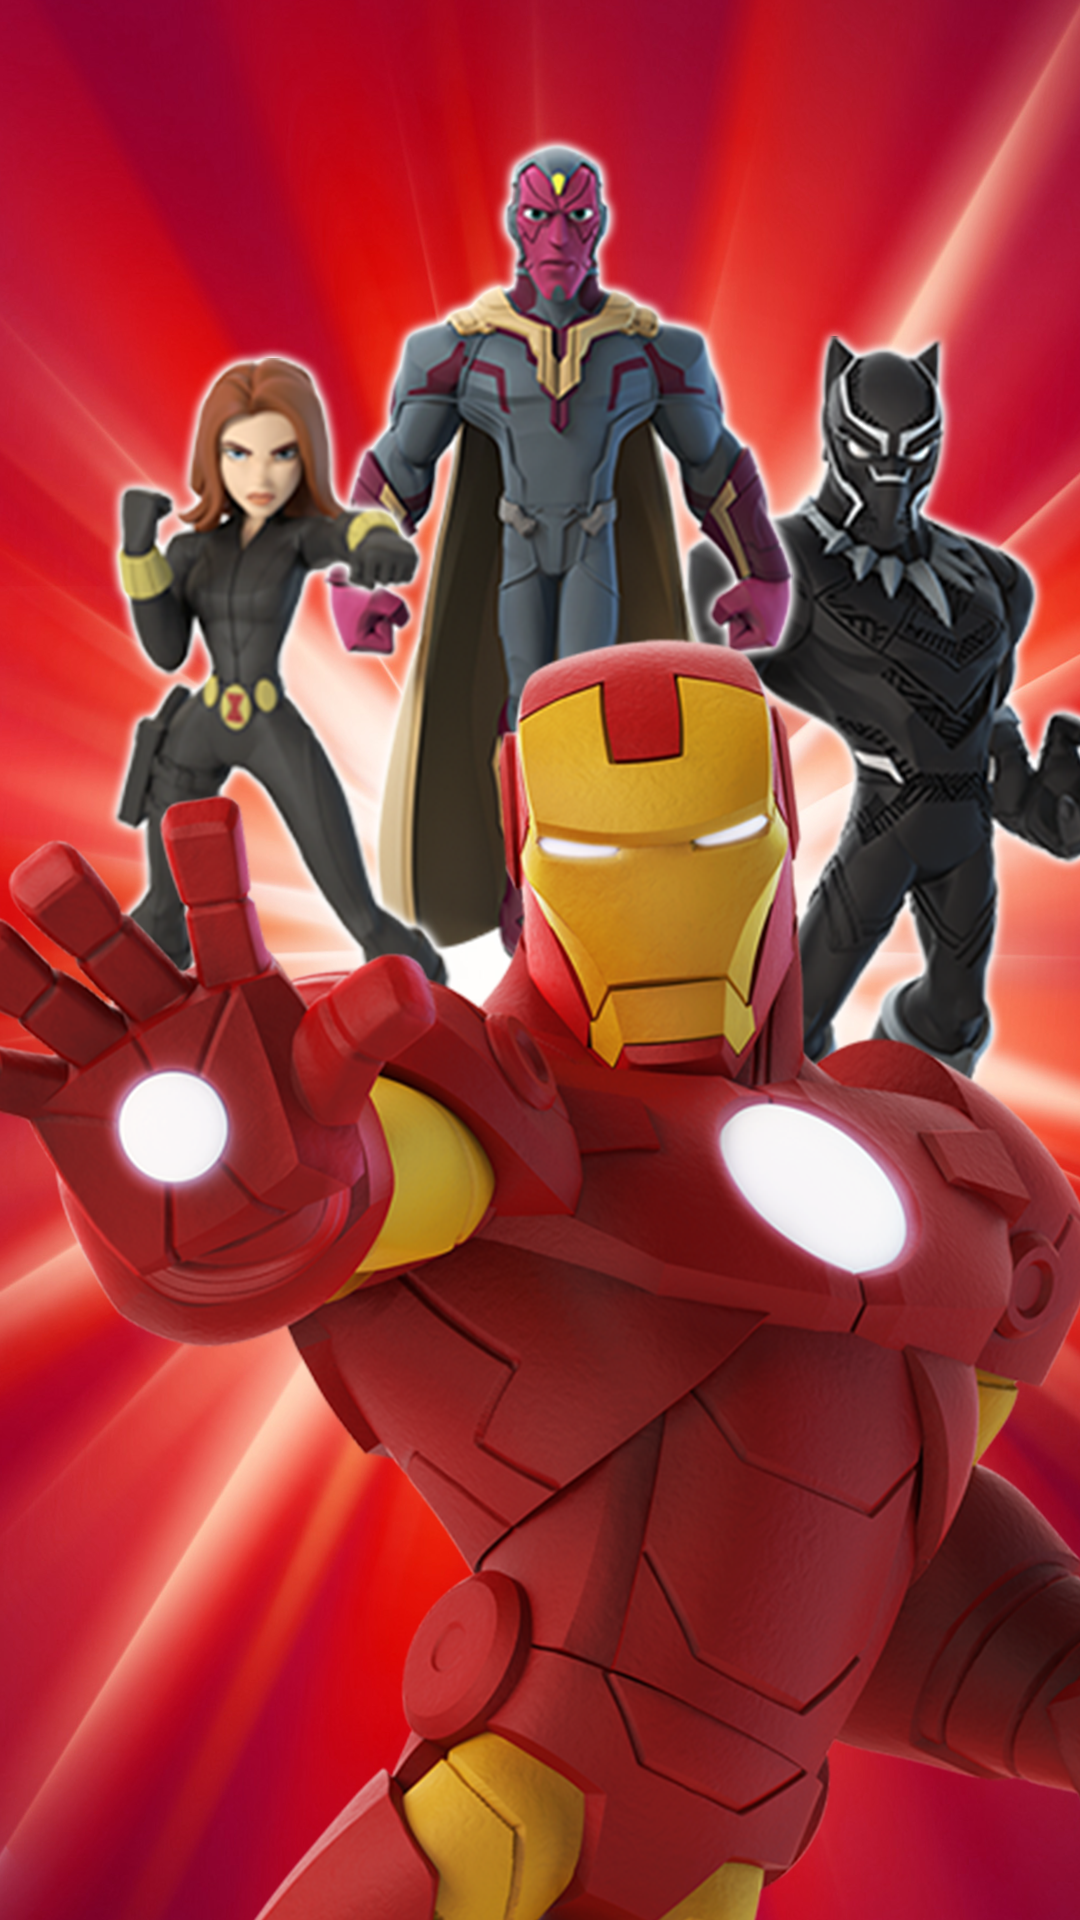 Disney Infinity Team Iron Man